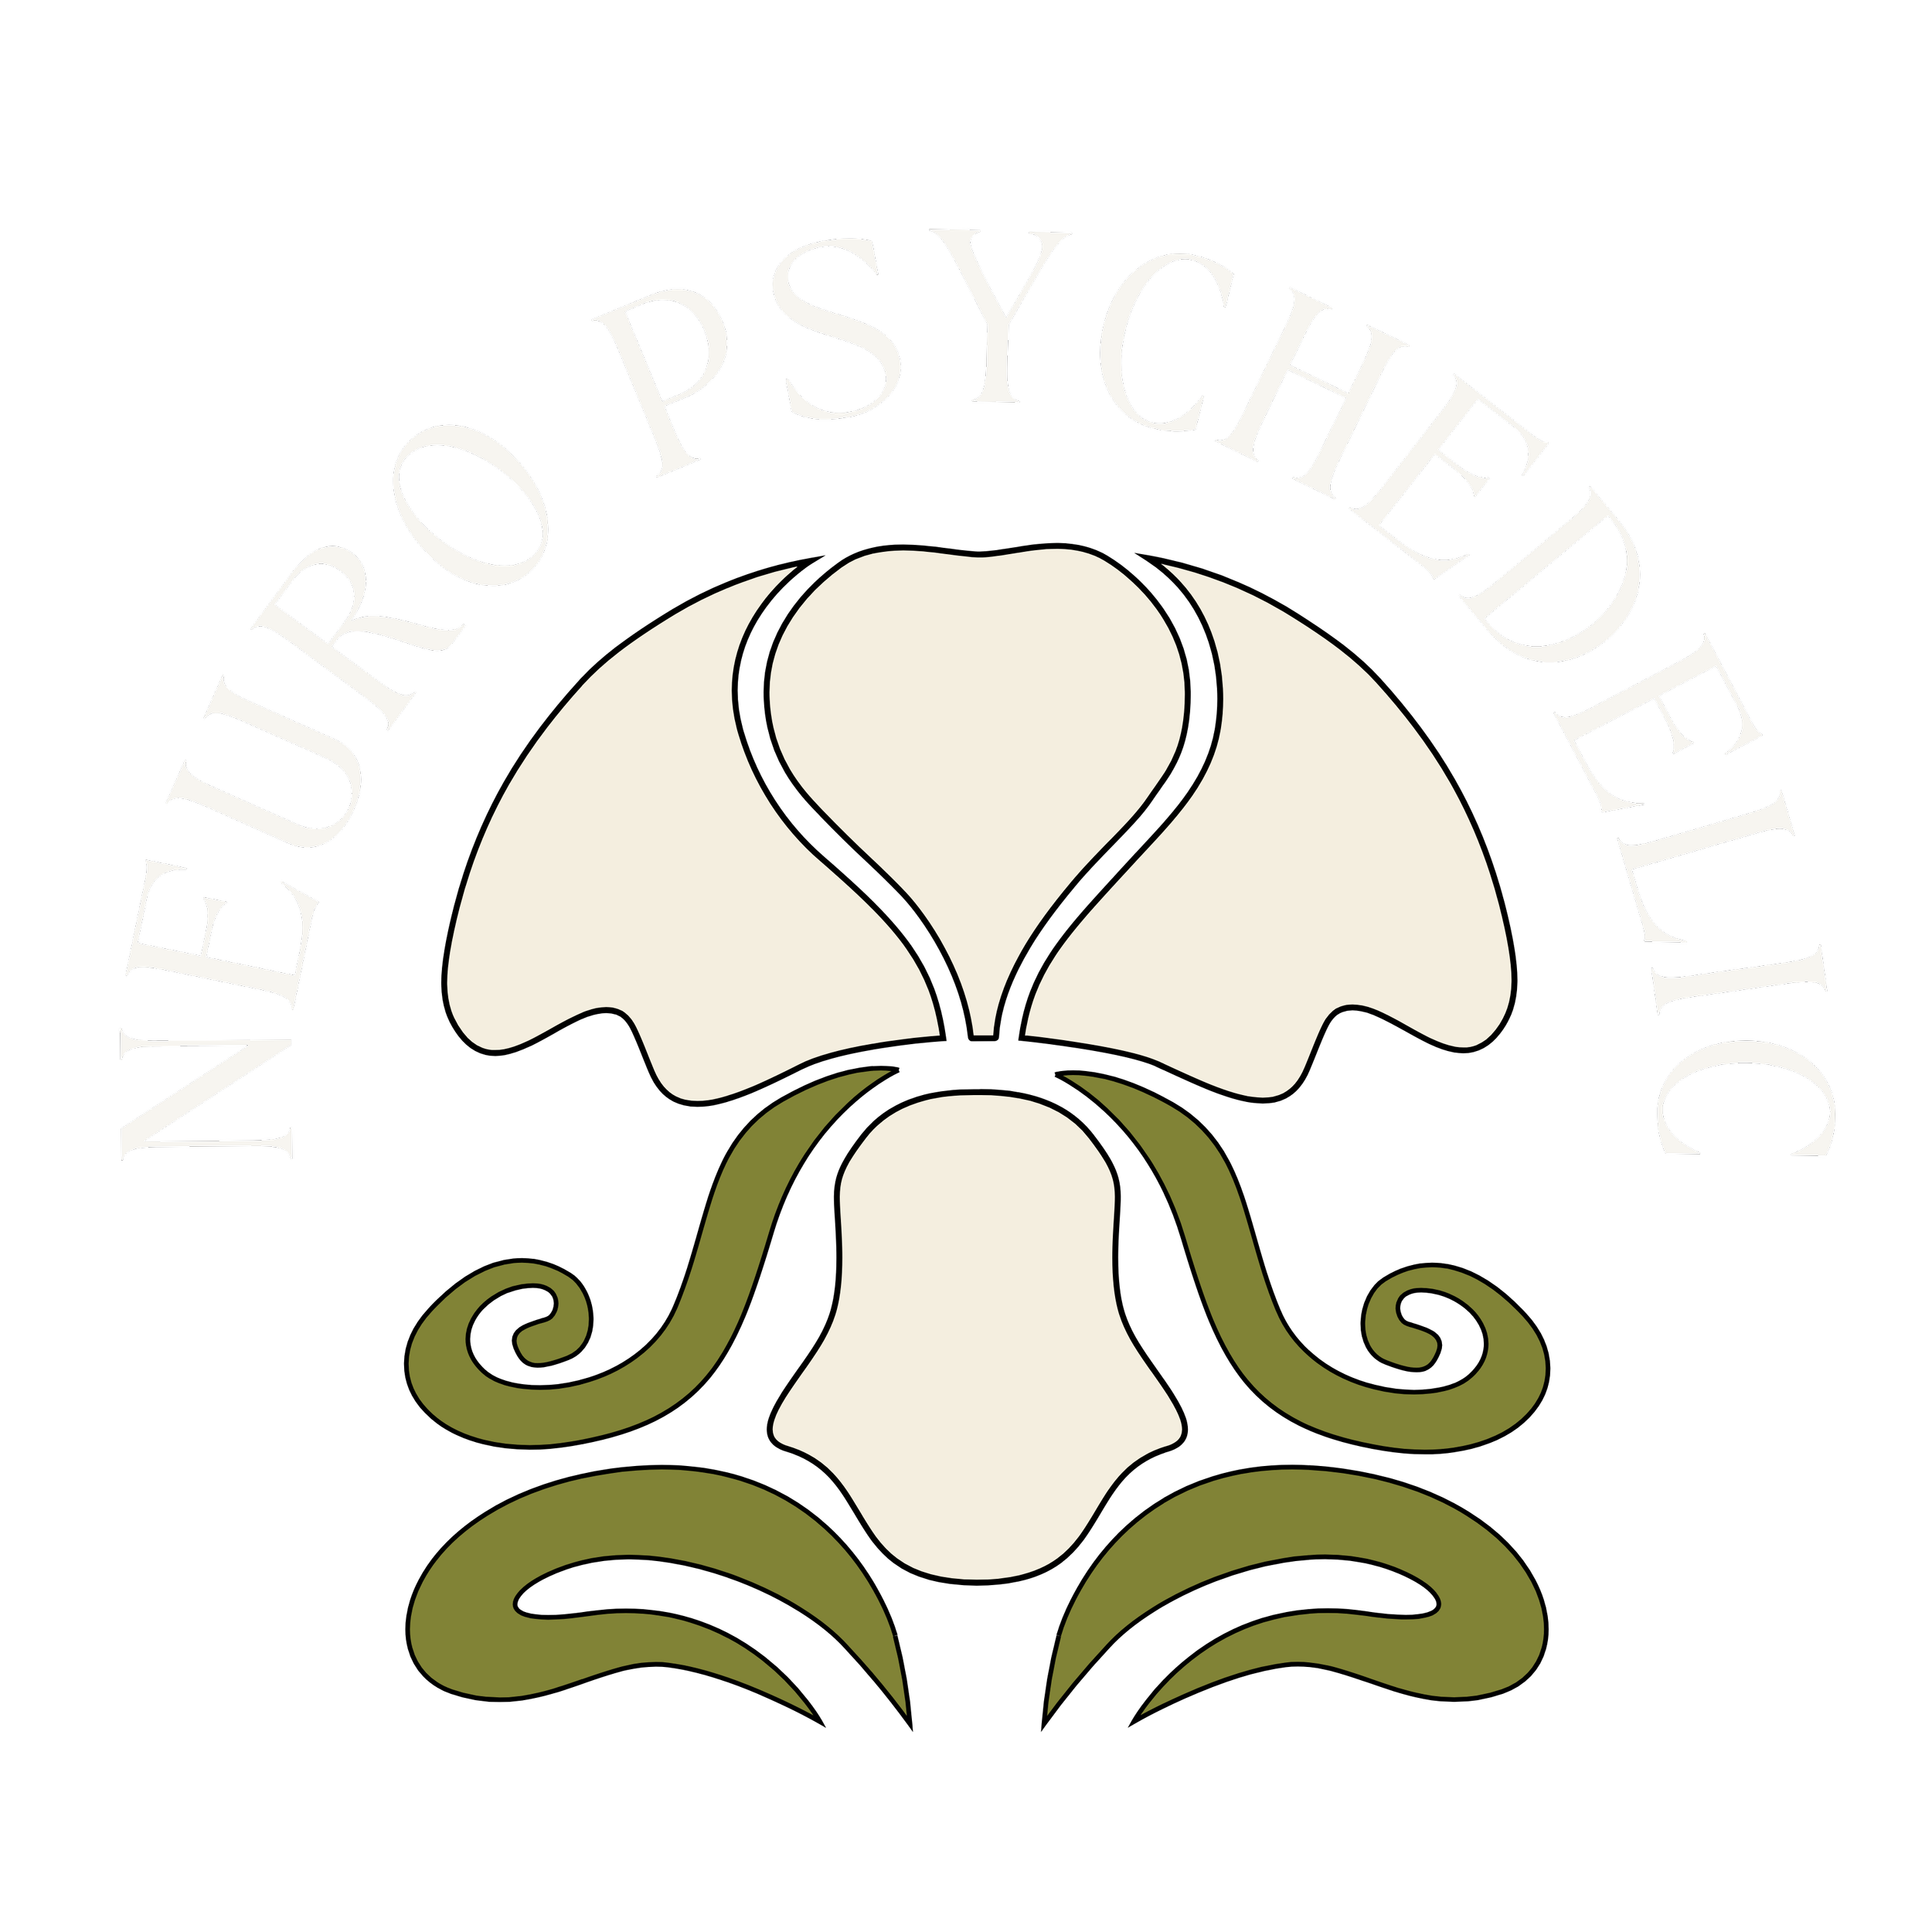 Neuro Psychedelic